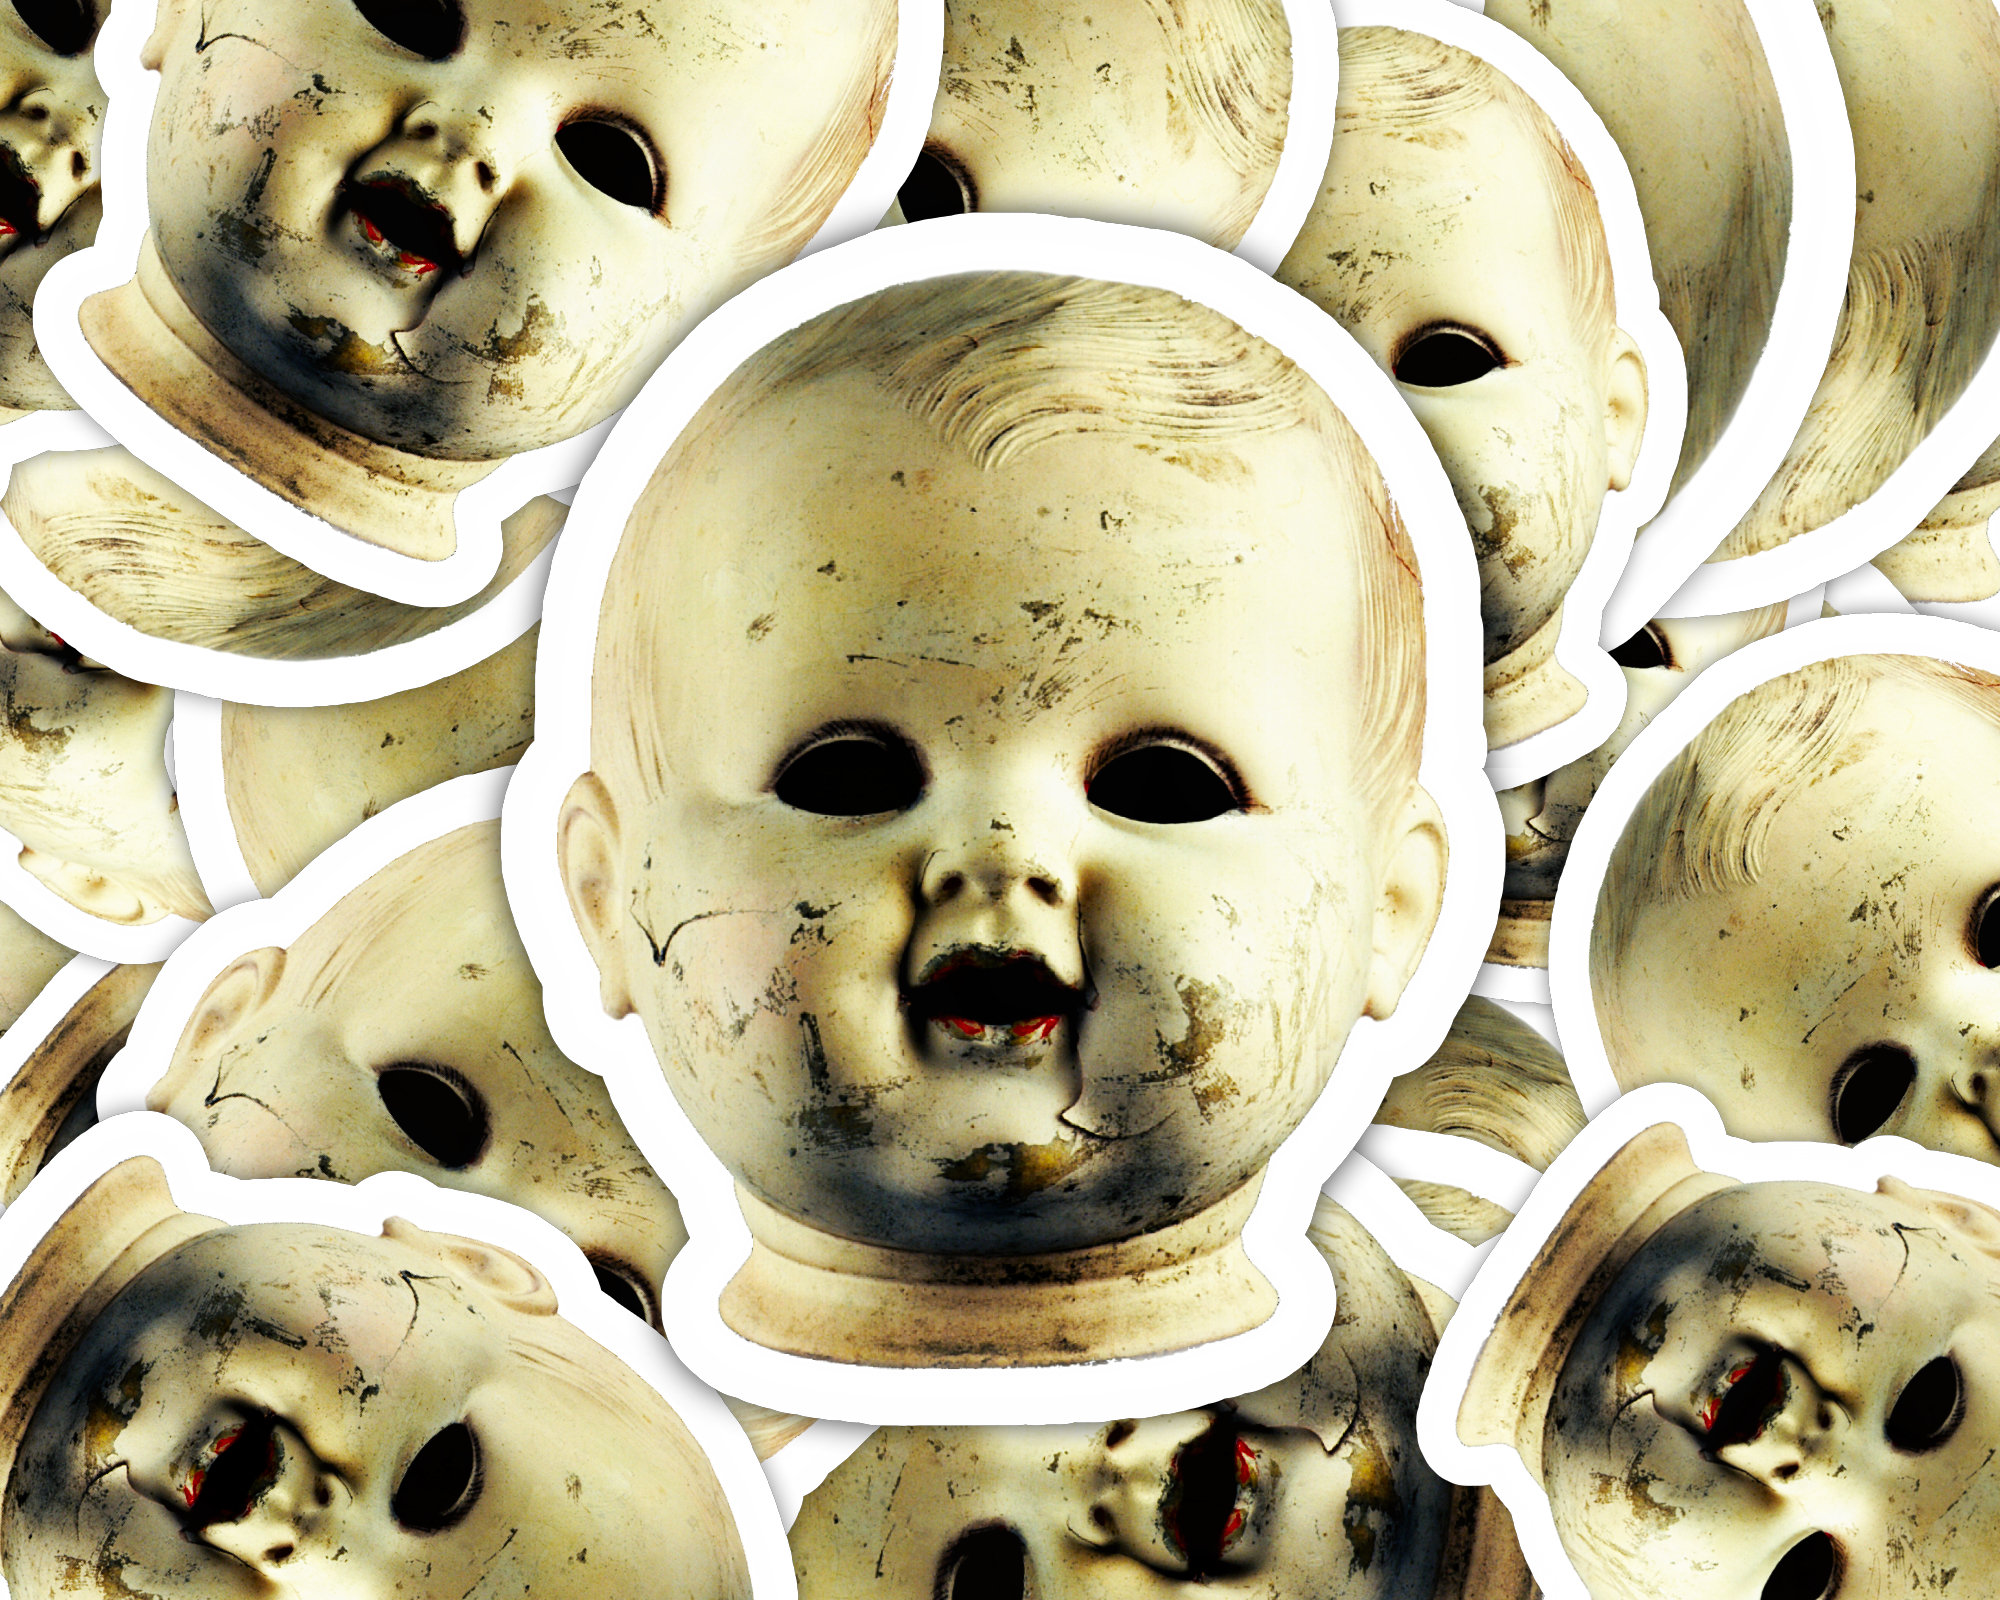 Creepy Head challenge exclusive sticker pack